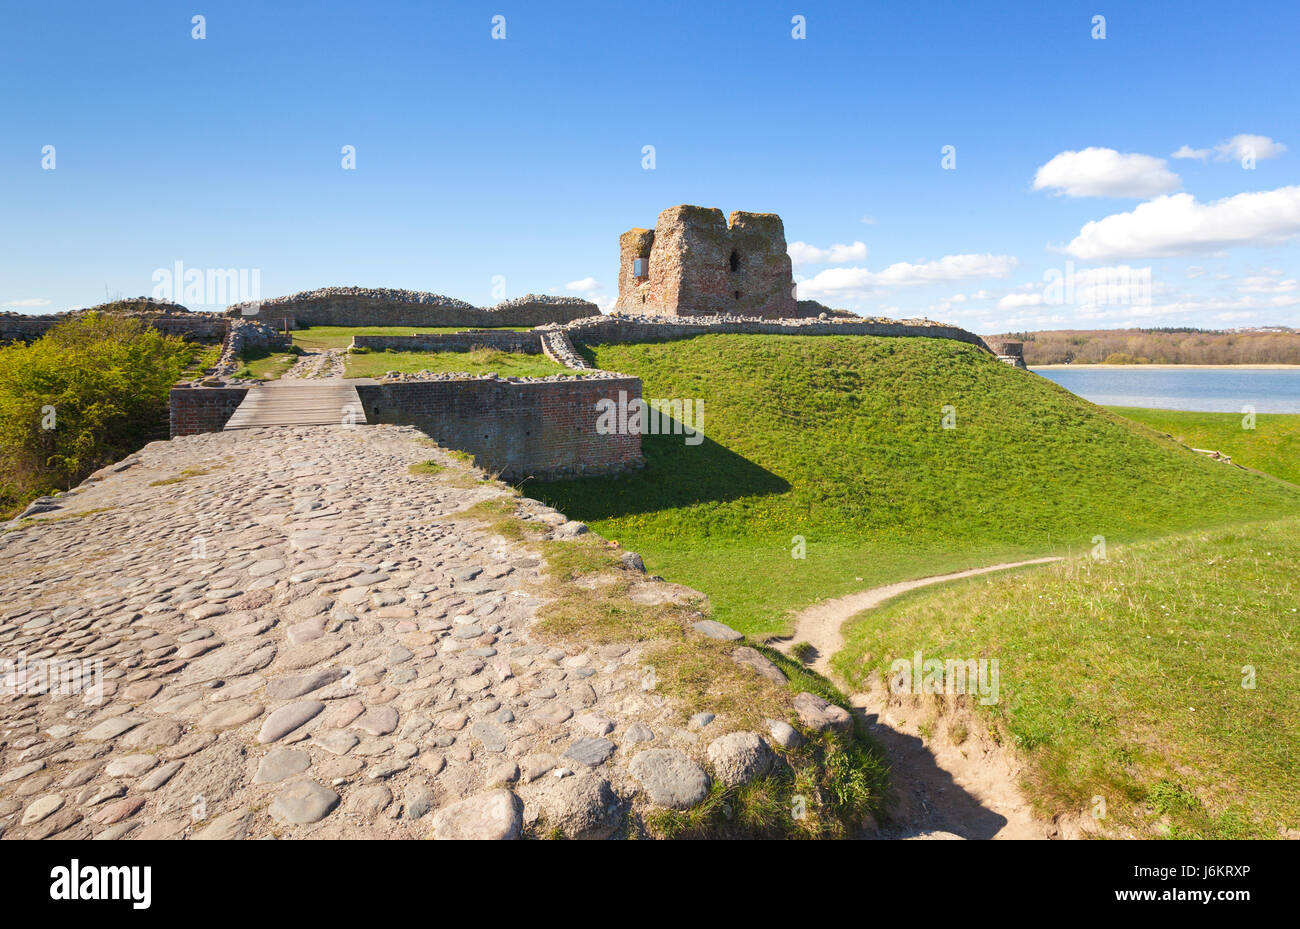 Ruins of 14th century Kalø castle, Mols Bjerge National Park, Jutland, Denmark Stock Photo